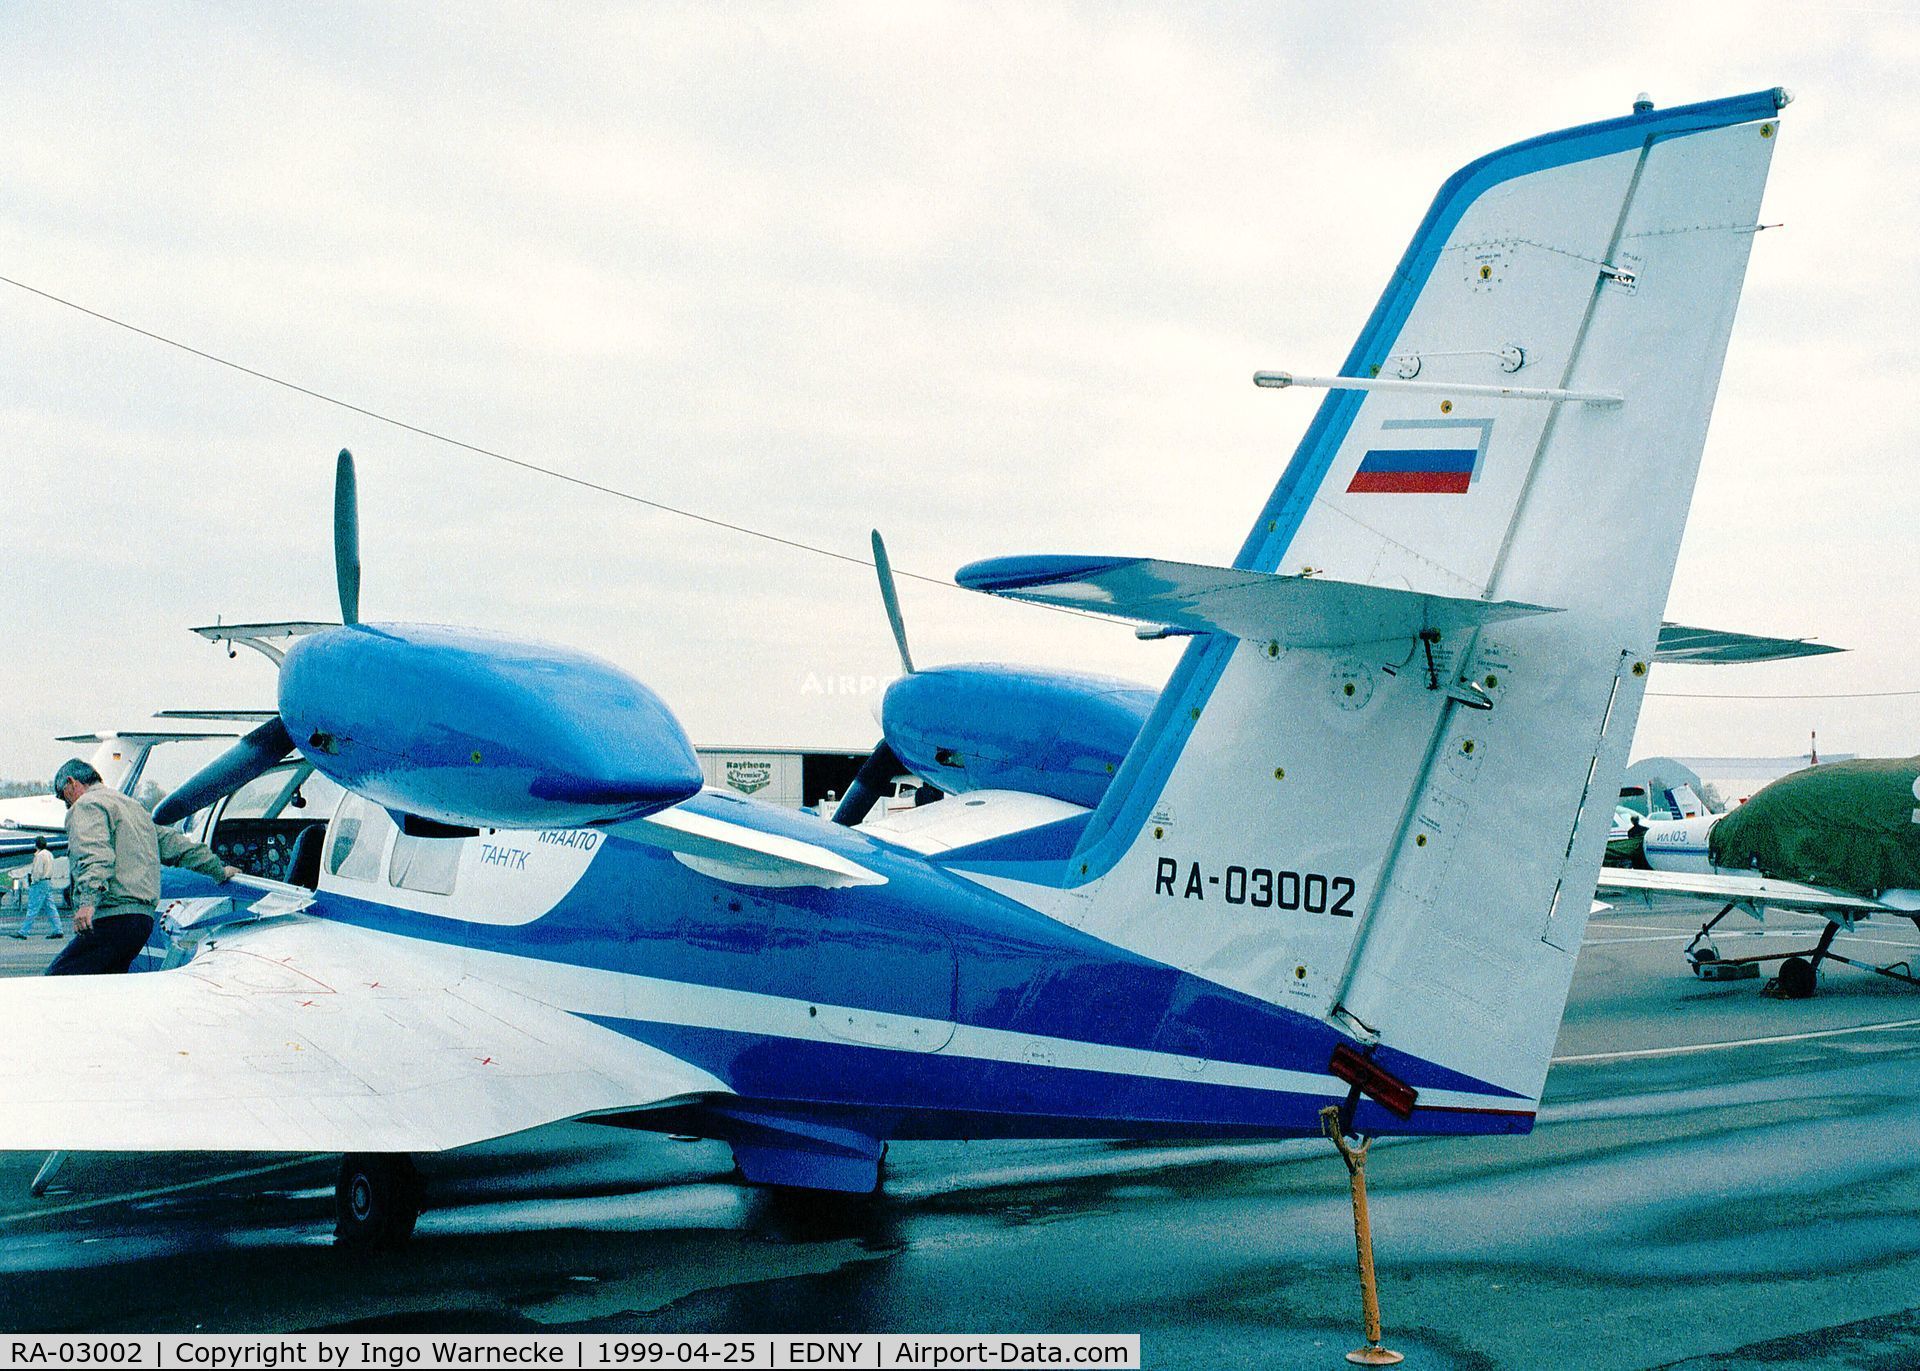 RA-03002, 1997 Beriev Be-103 C/N 3002, Beriev Be-103 second prototype at the Aero 1999, Friedrichshafen